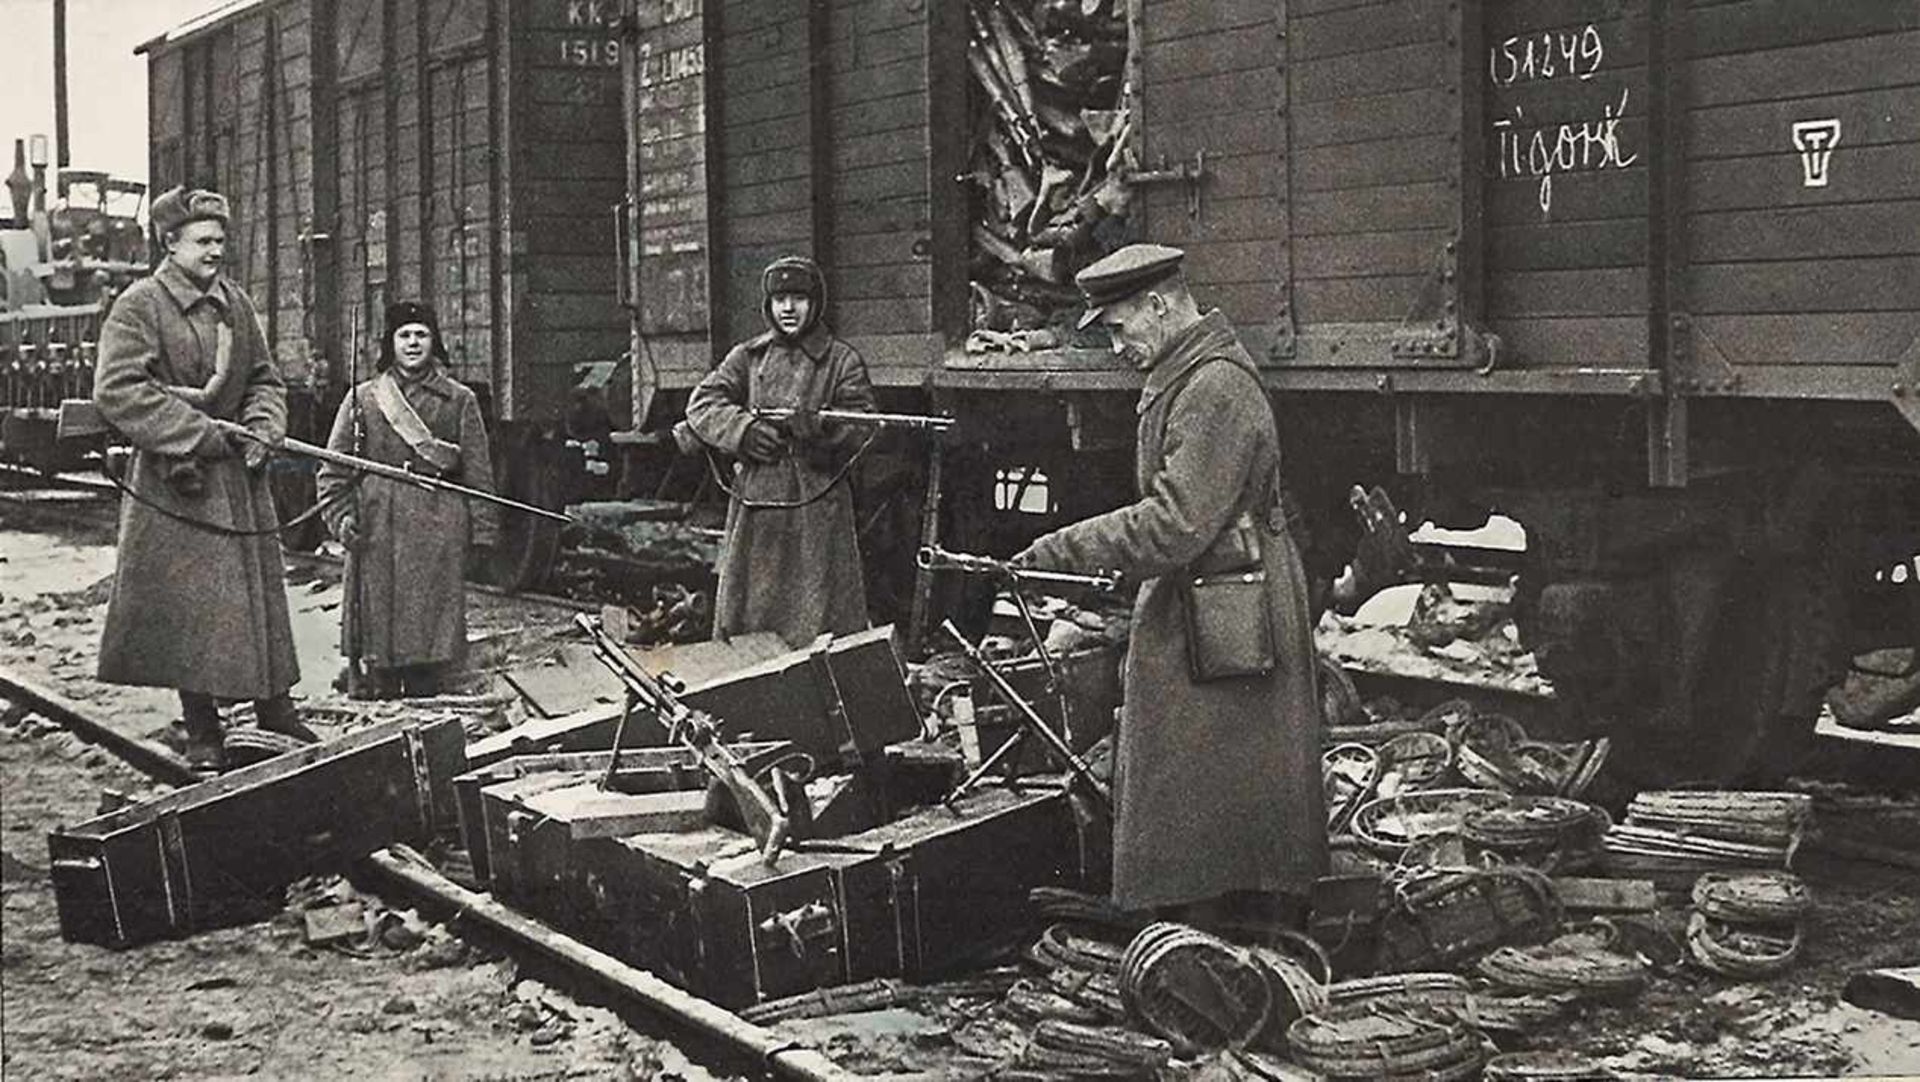 [Soviet]. Photograph "Echelons with captured German weapons". 1940s. Original print. - 9x16 cm.